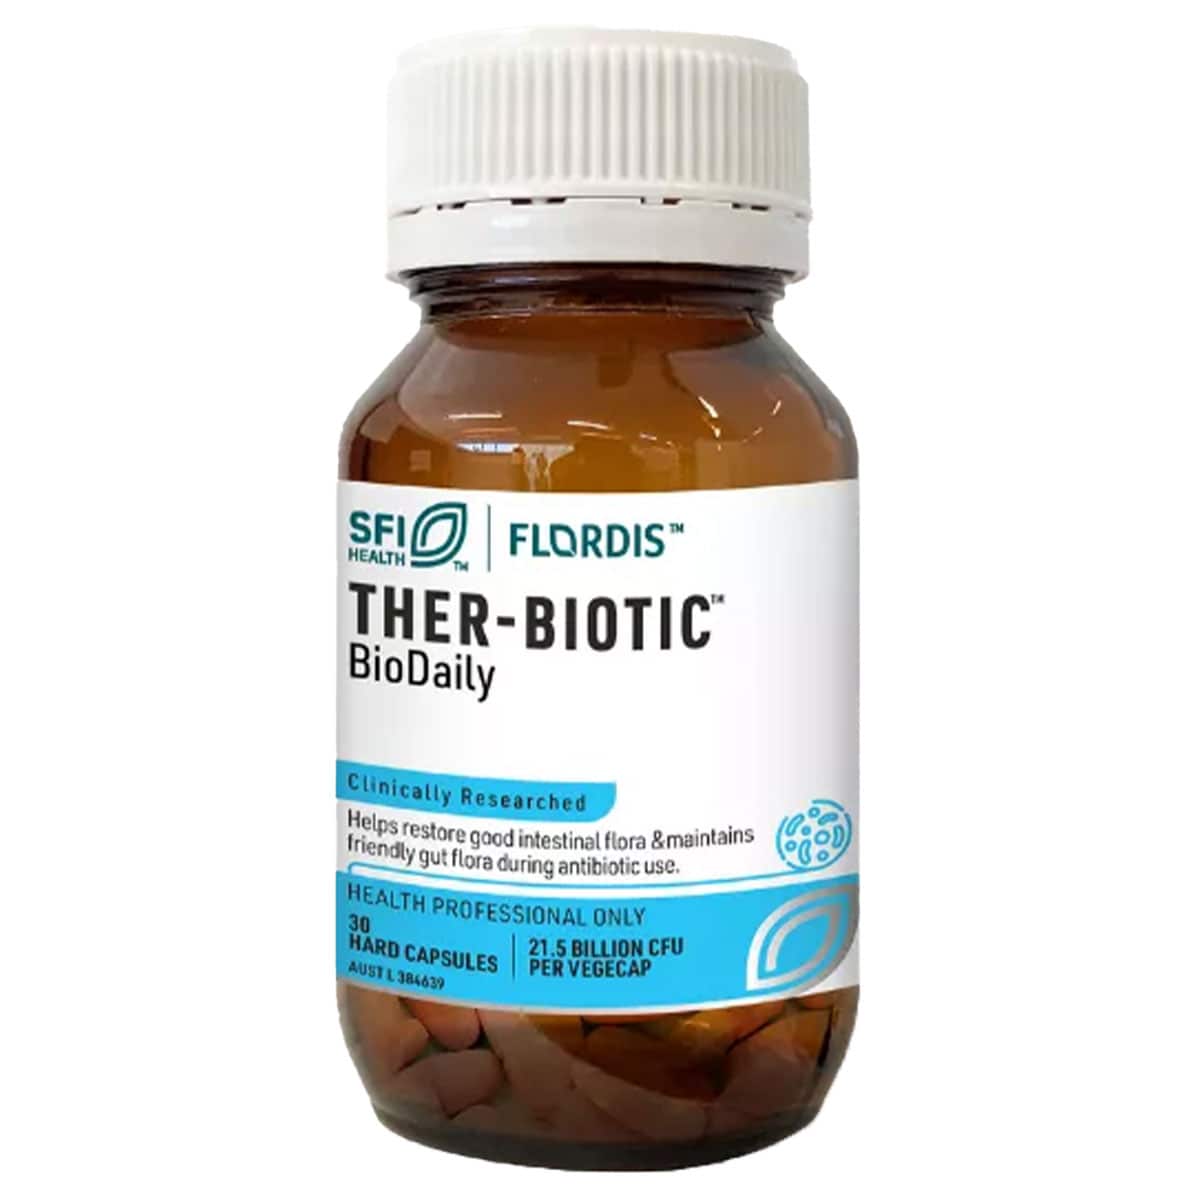 Flordis Ther-Biotic BioDaily 30 Capsules